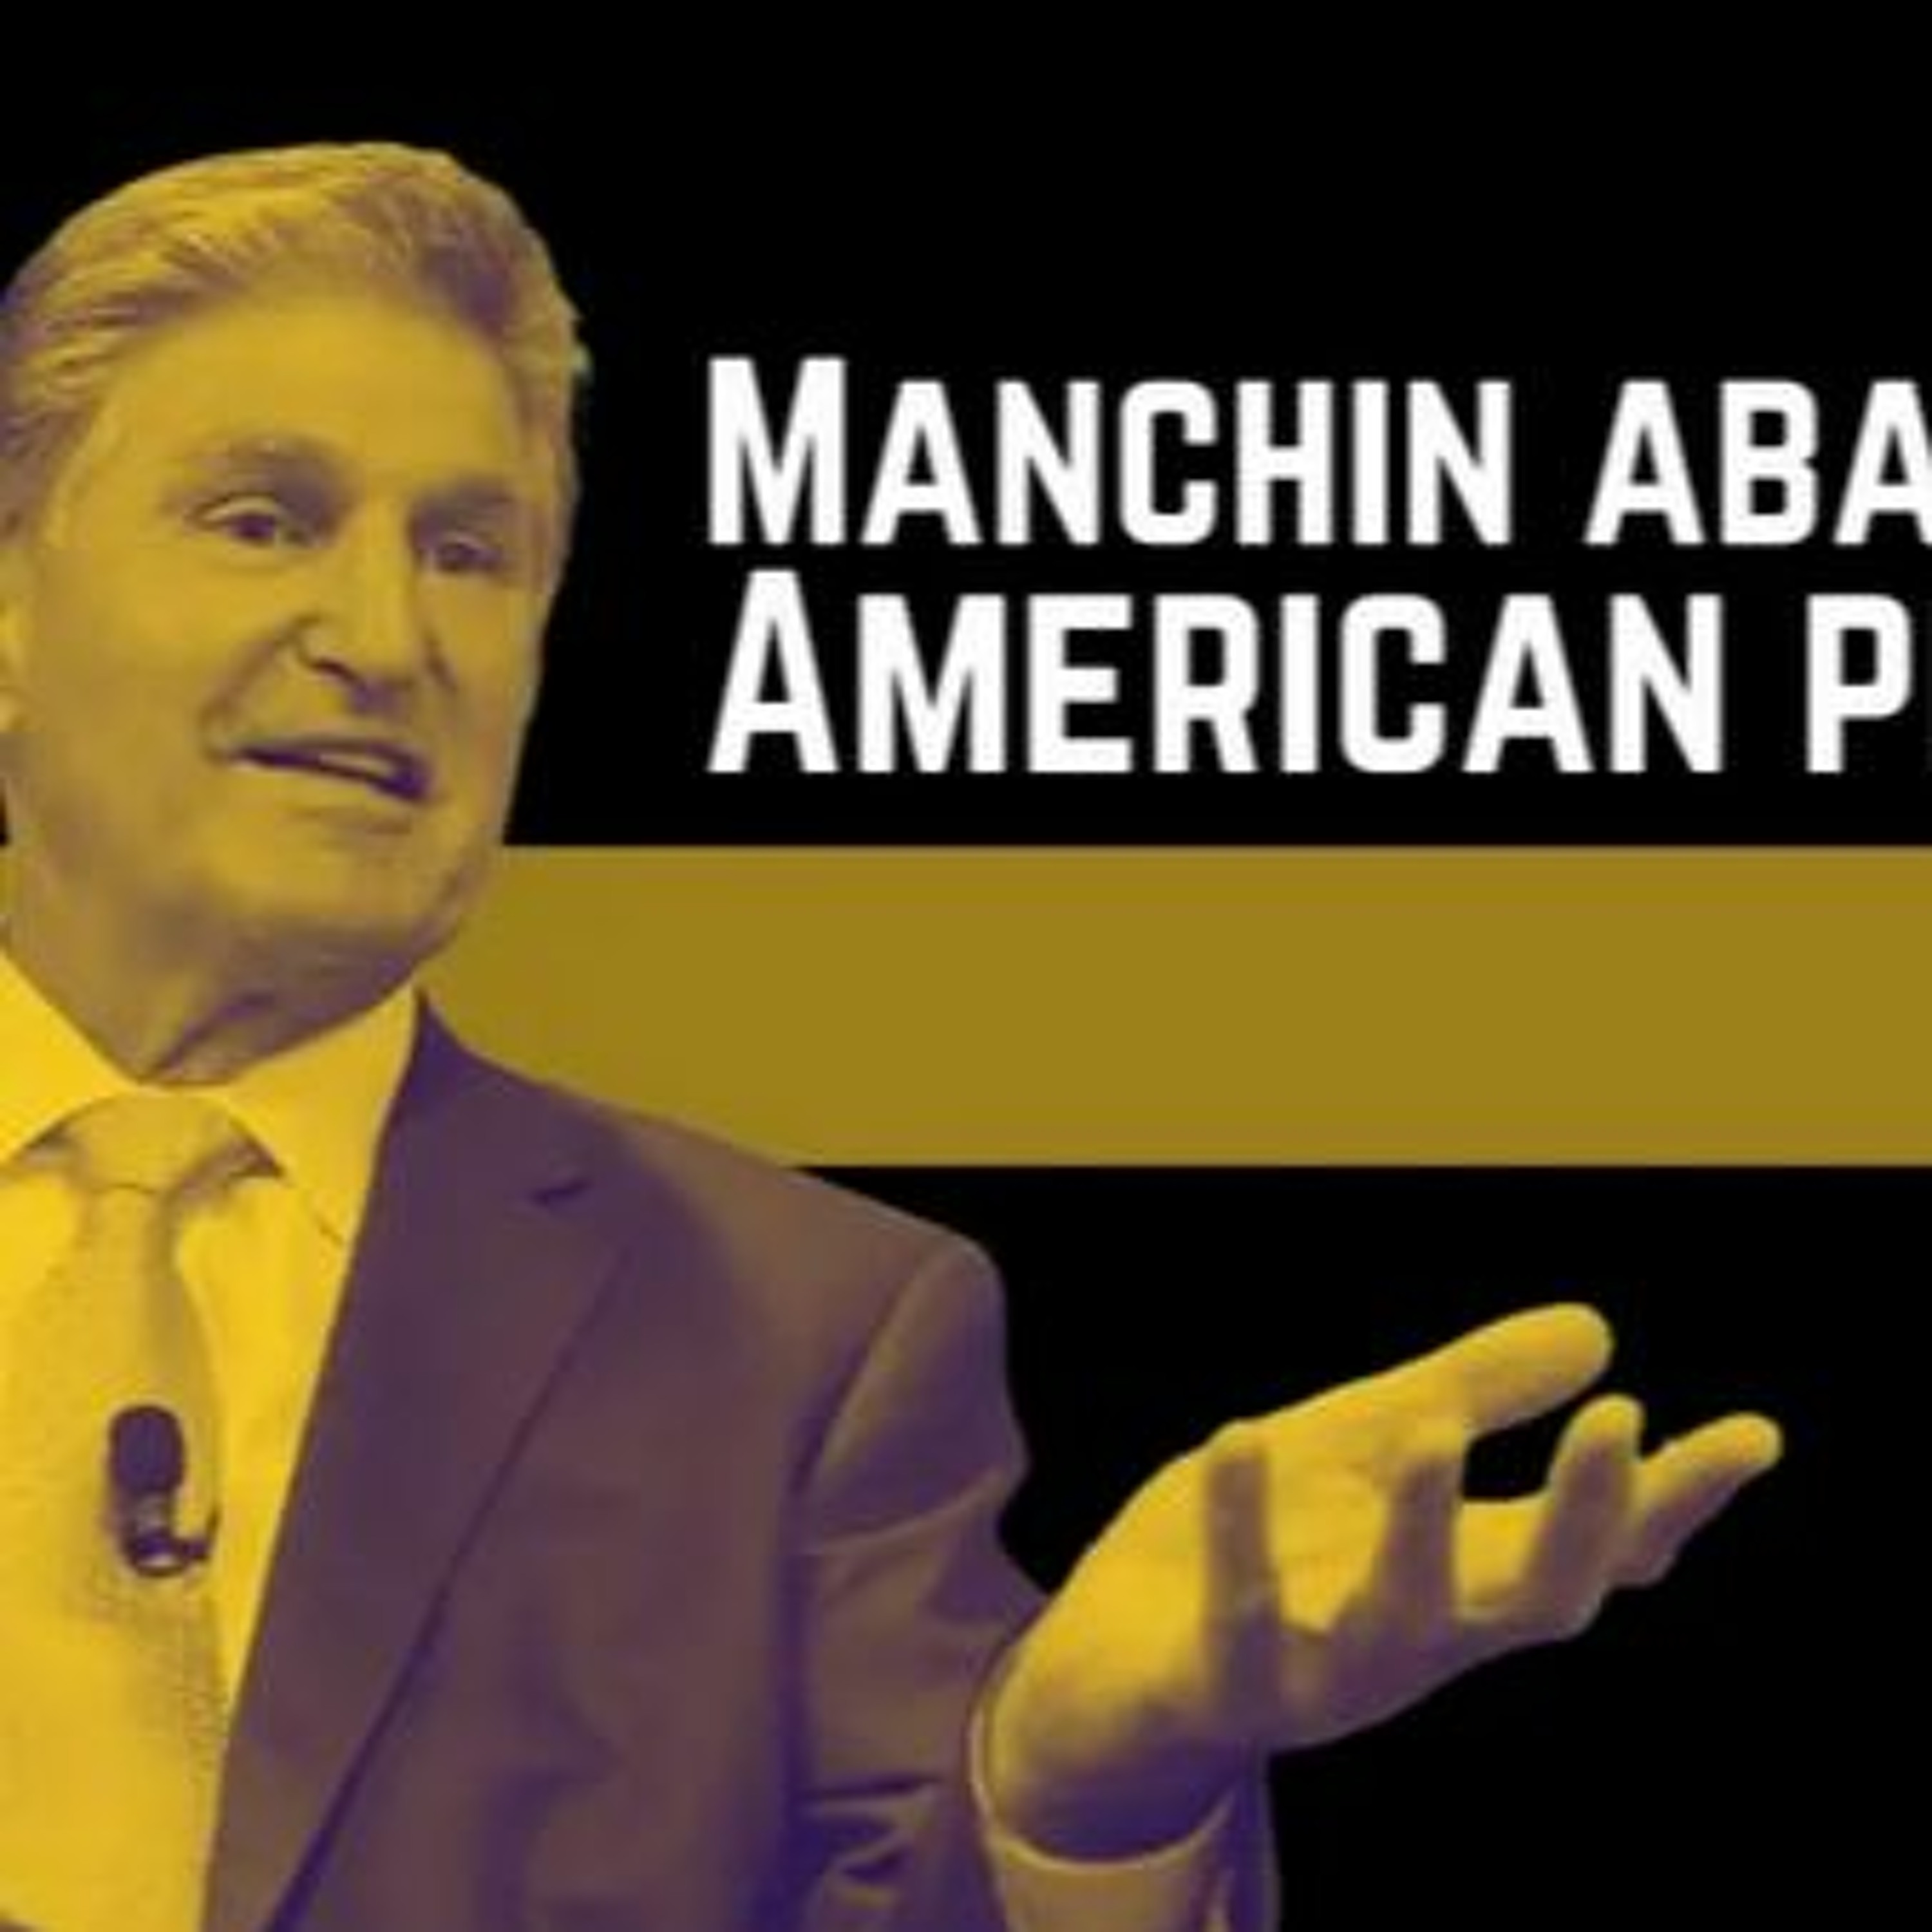 Manchin abandons American people